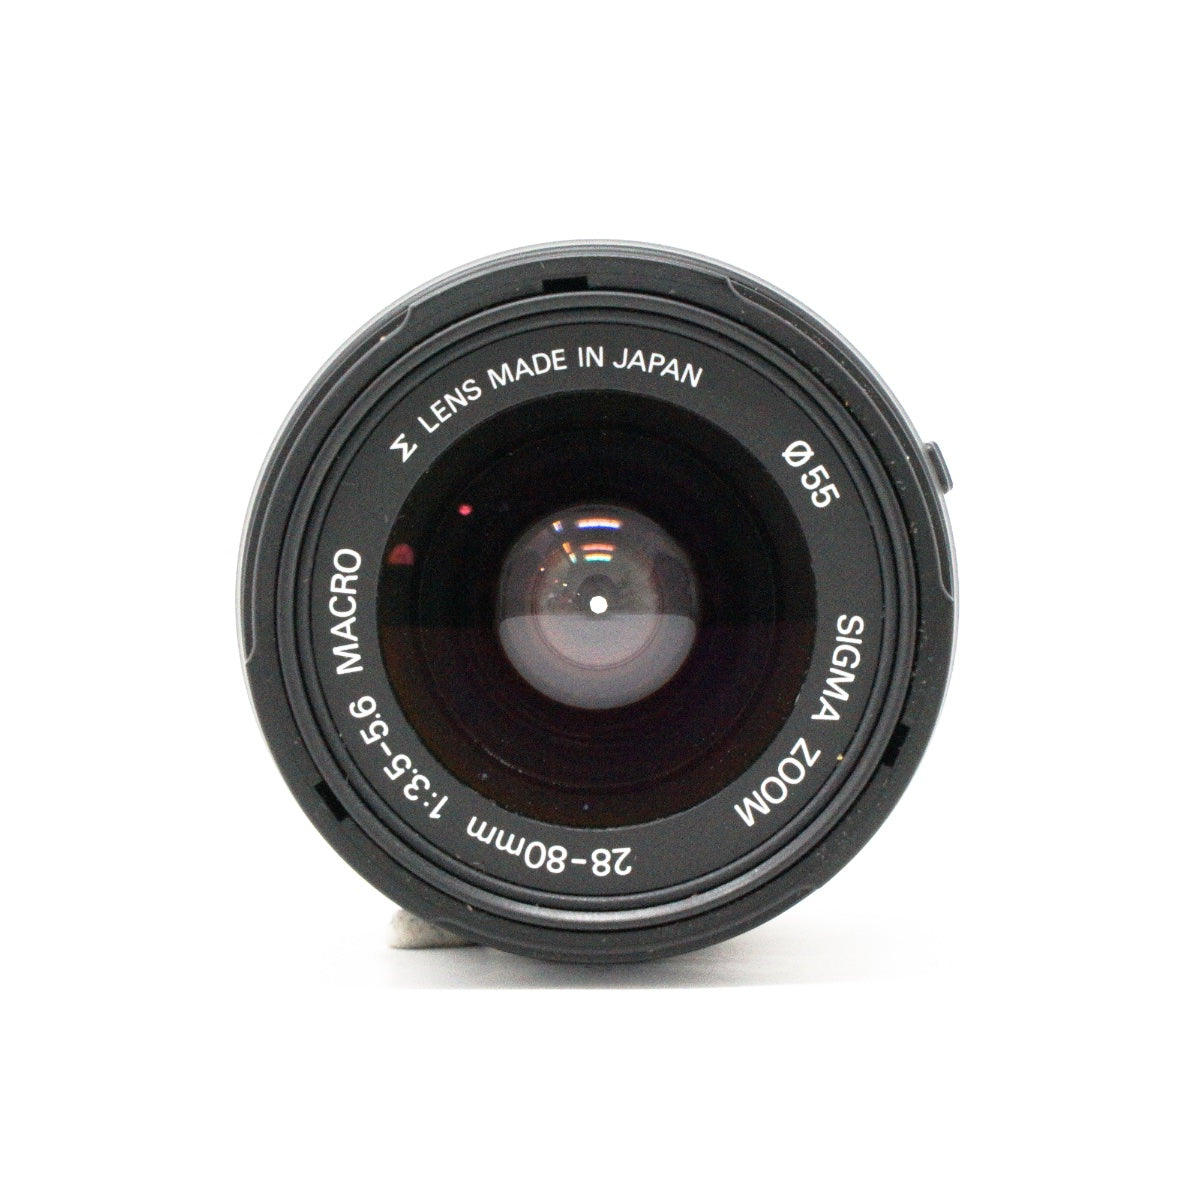 Used Sigma 28-80mm F3.5-5.6 Macro lens in Pentax AF fitting